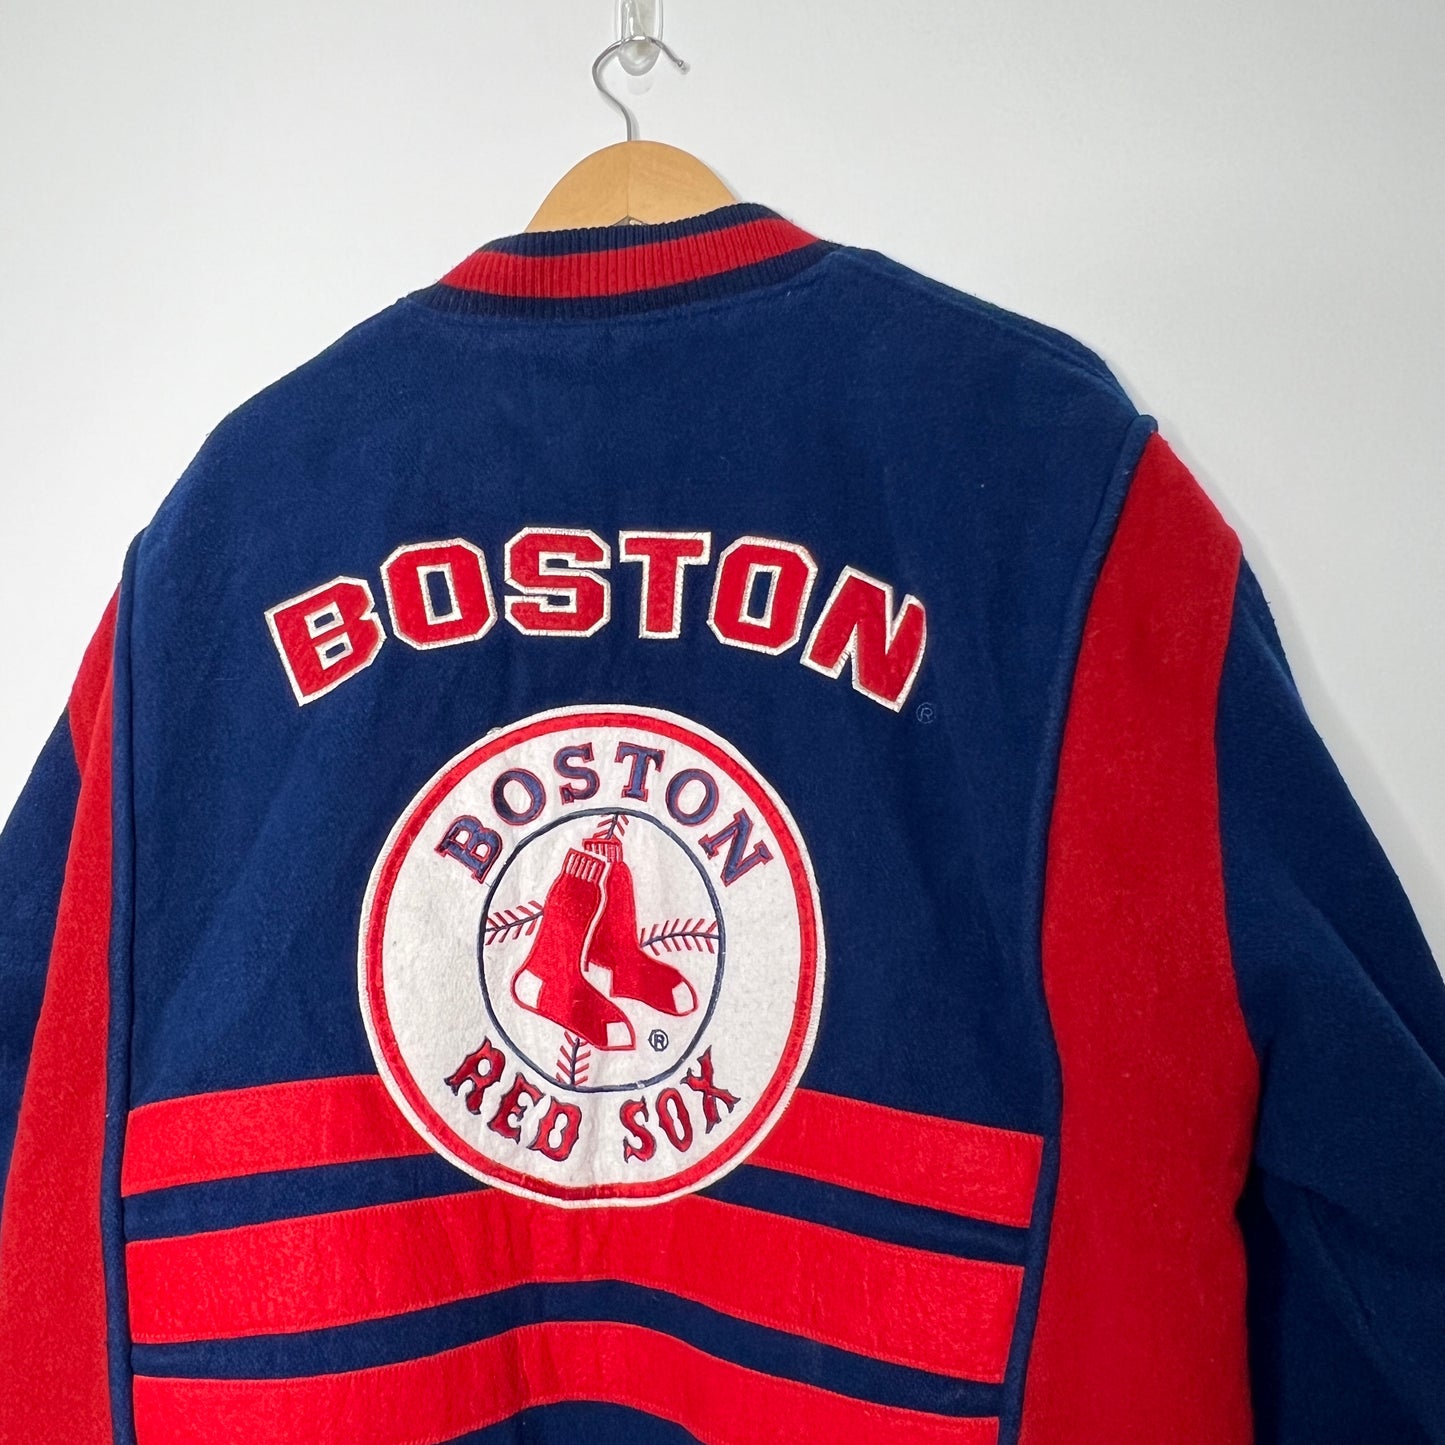 Boston Red Sox Nutmeg by Campri Jacket